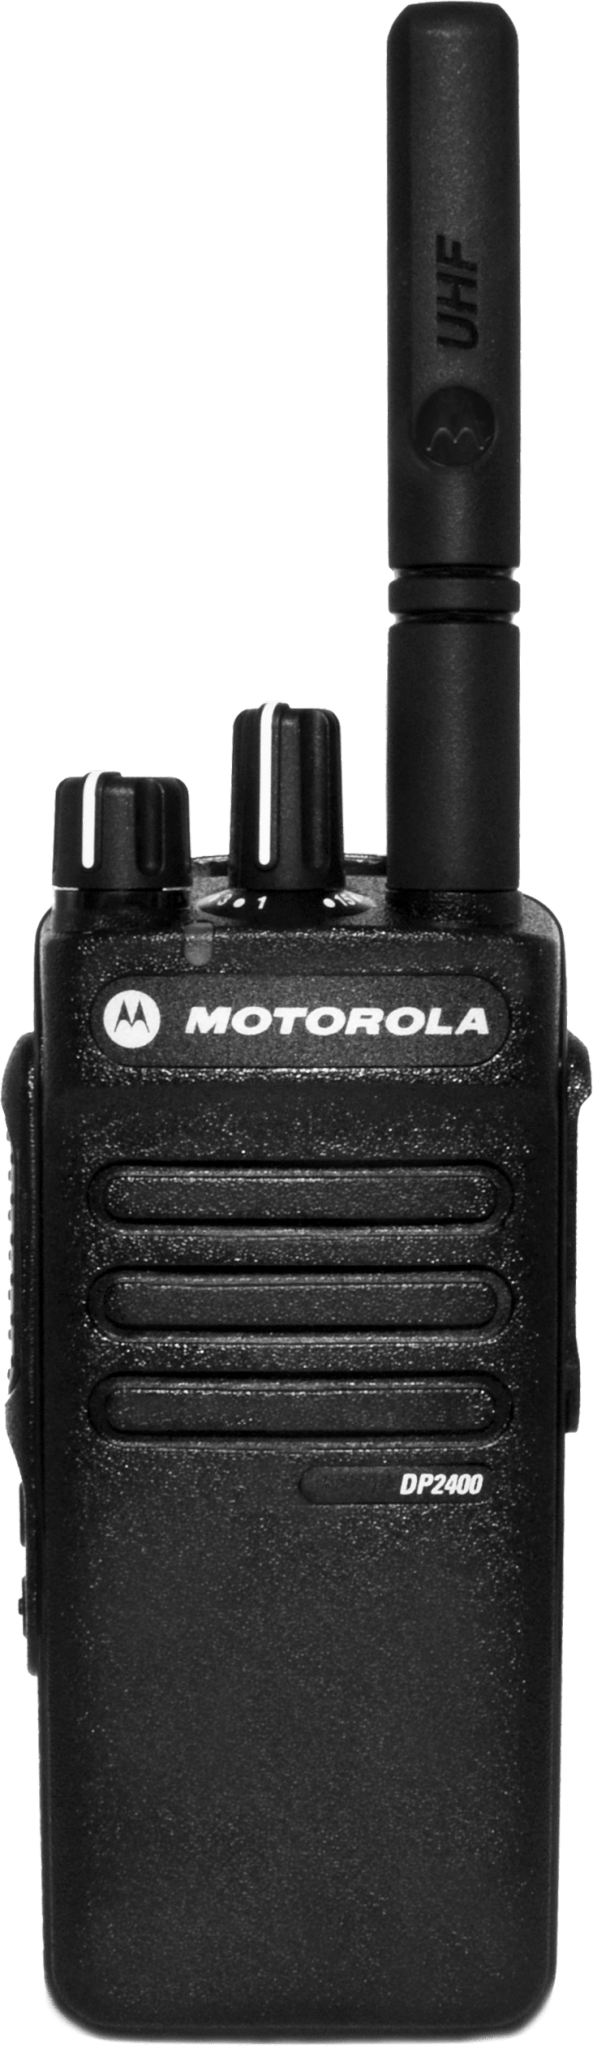 Motorola DP2400e featured image